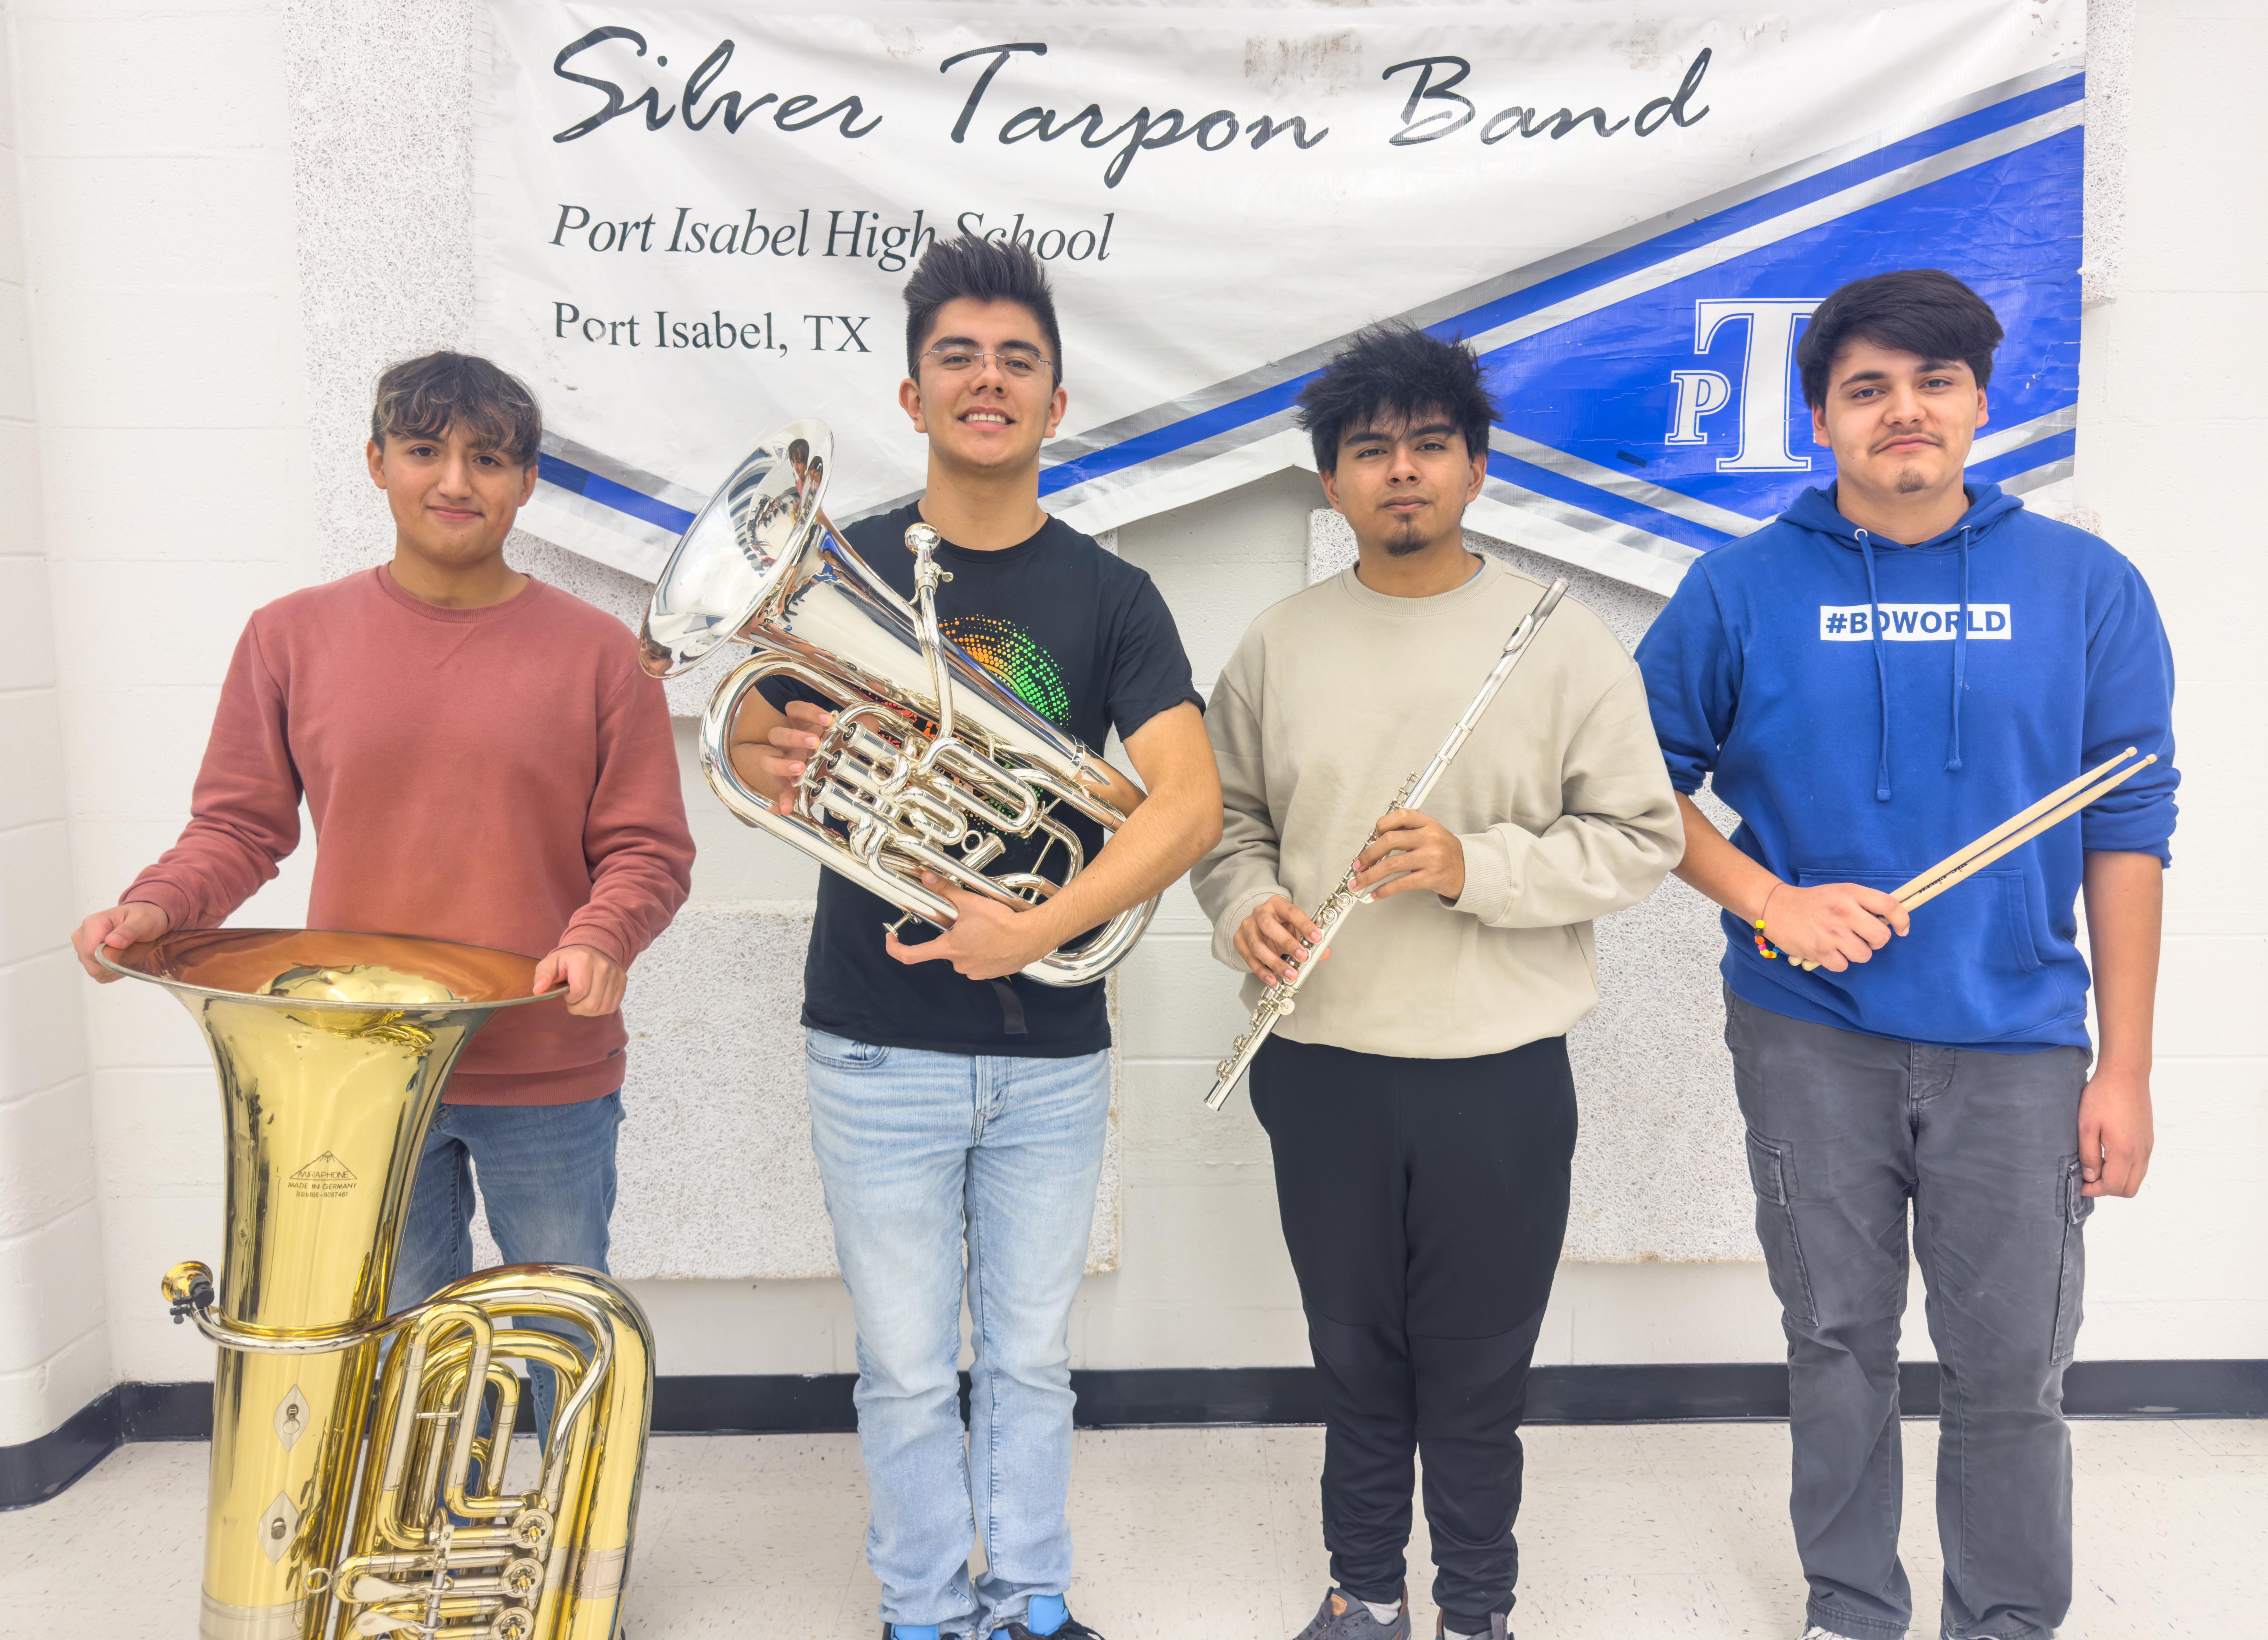 Silver Tarpon band